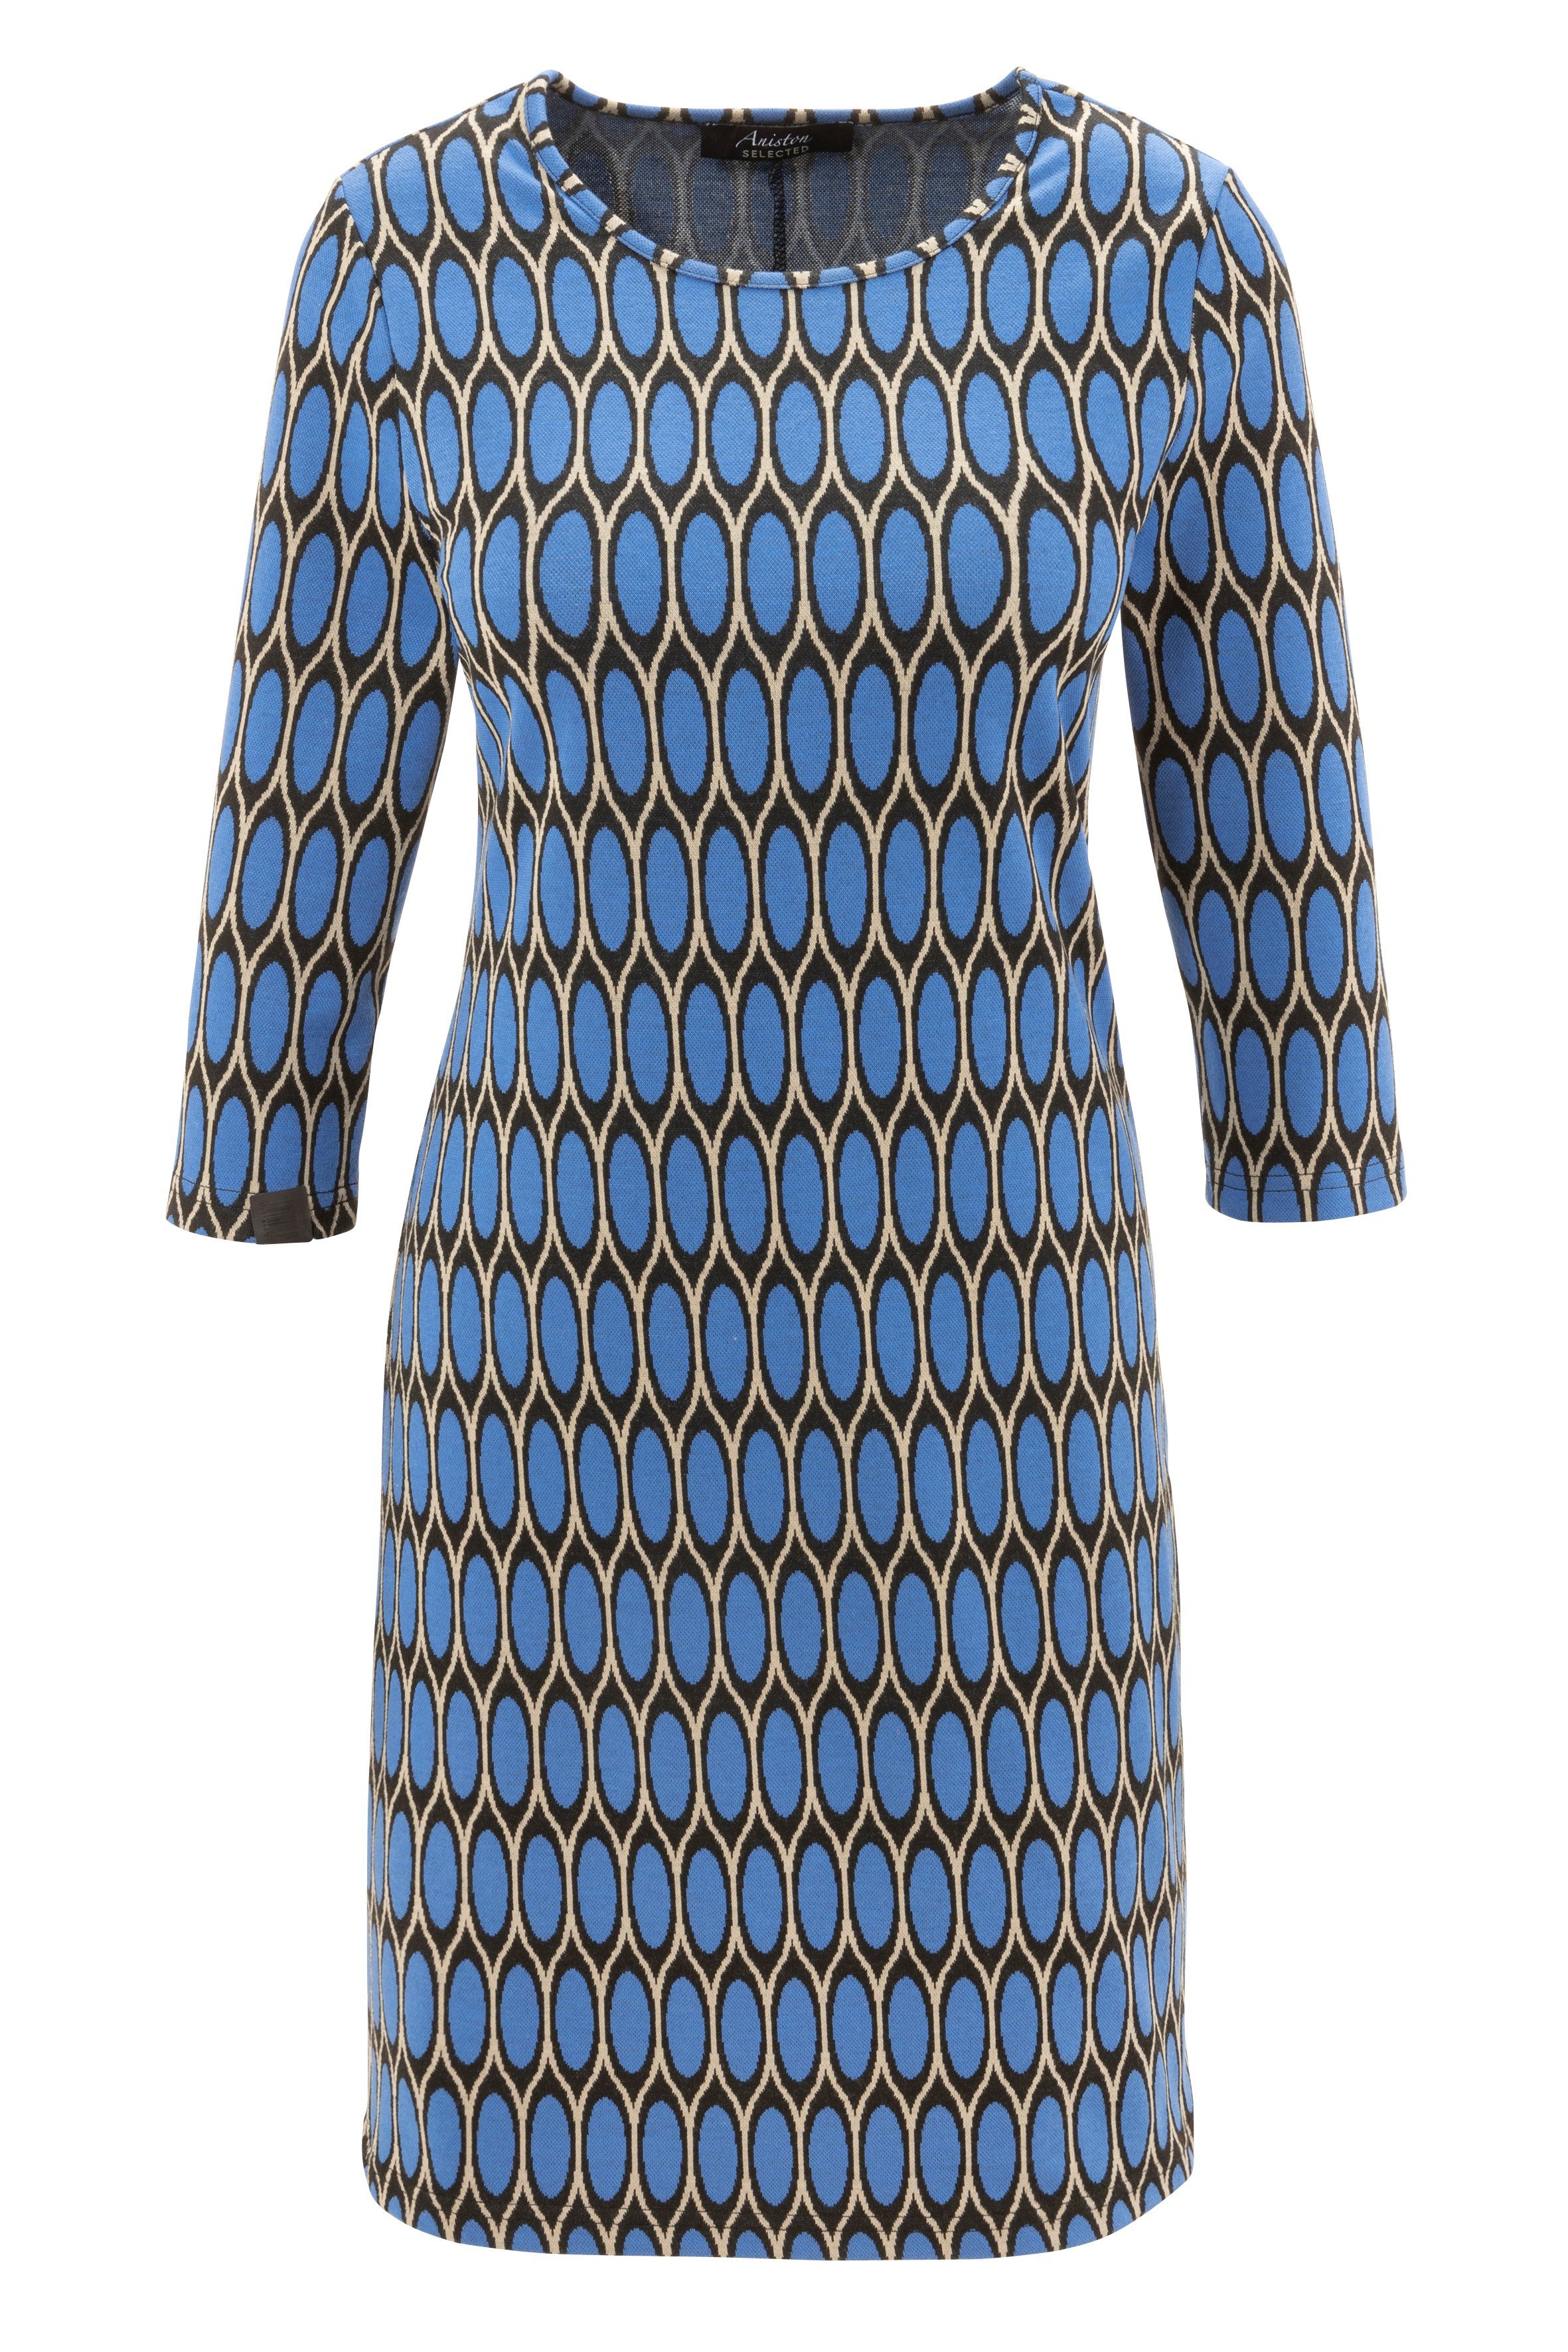 Jerseykleid Retro-Muster Jacquard aus SELECTED Aniston mit